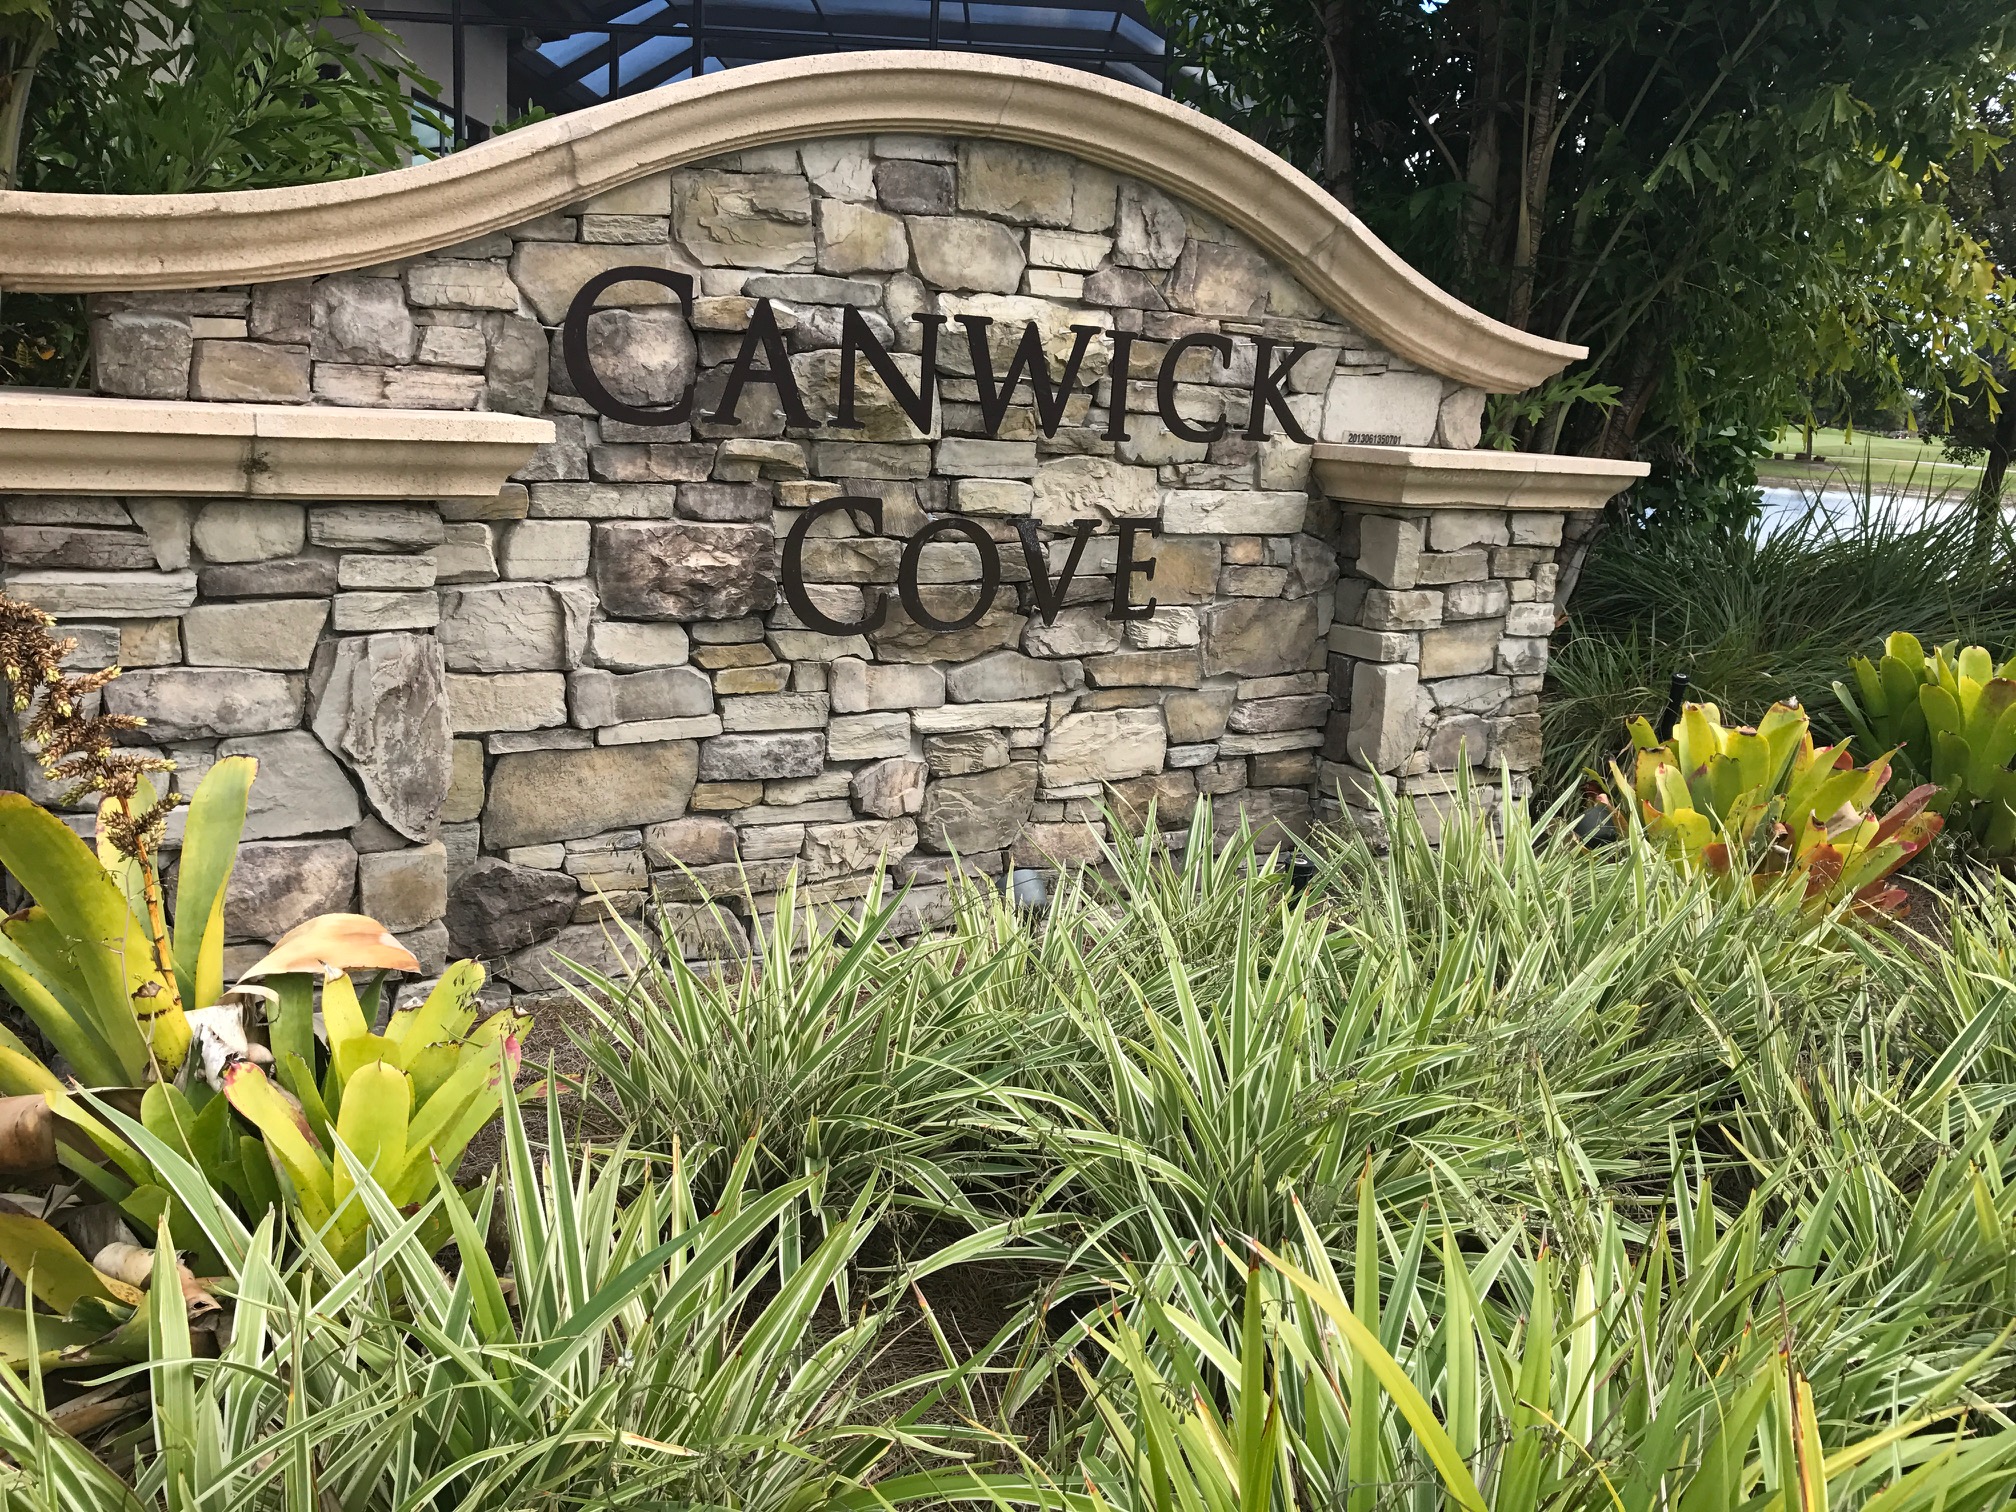 Canwick Cove